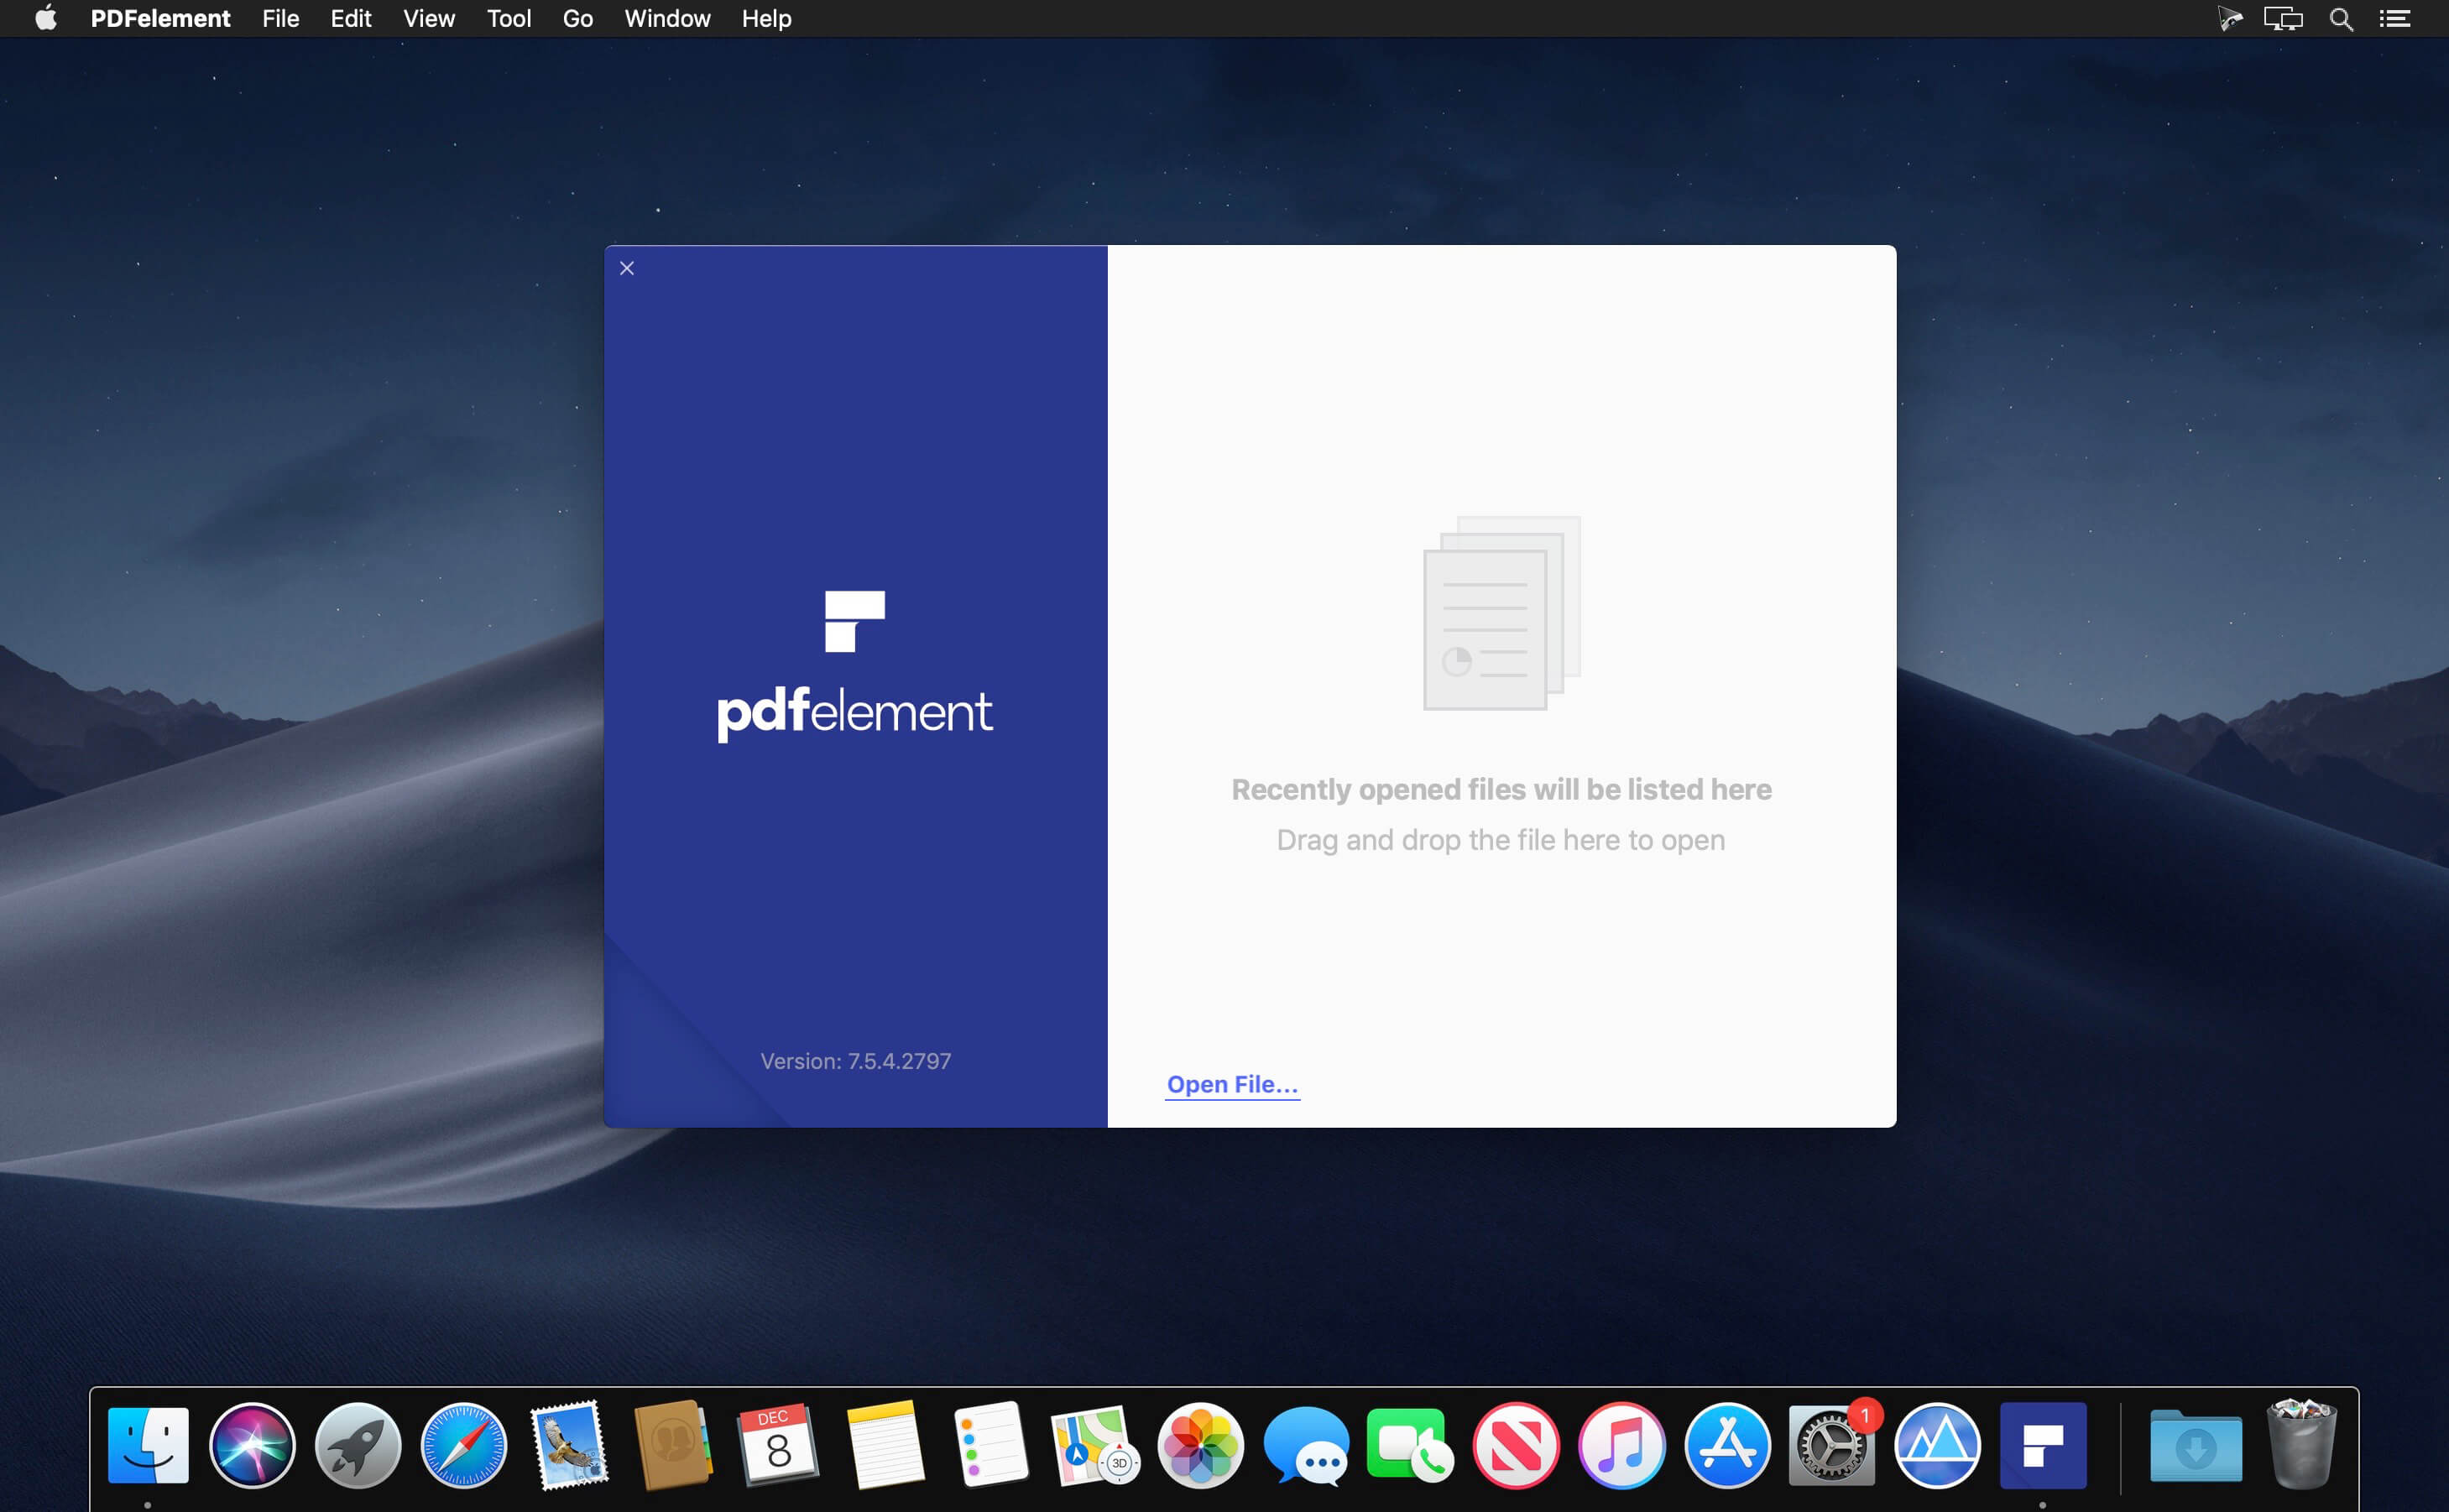 Wondershare PDFelement Pro 10.2.2.2587 instal the new